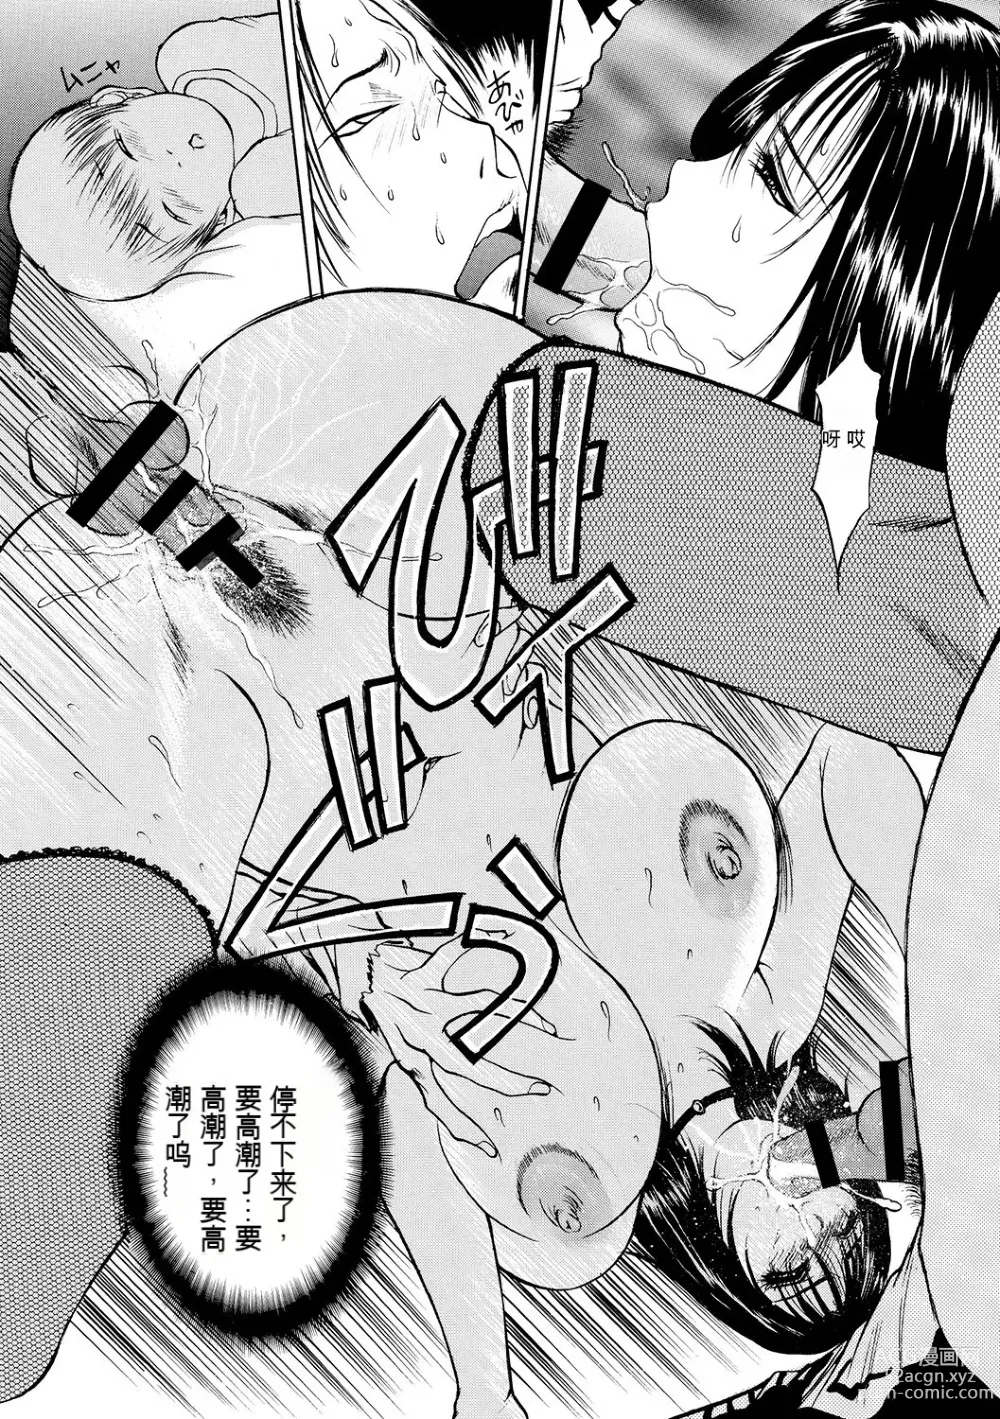 Page 209 of manga 母淫いぢり Boin Ijiri